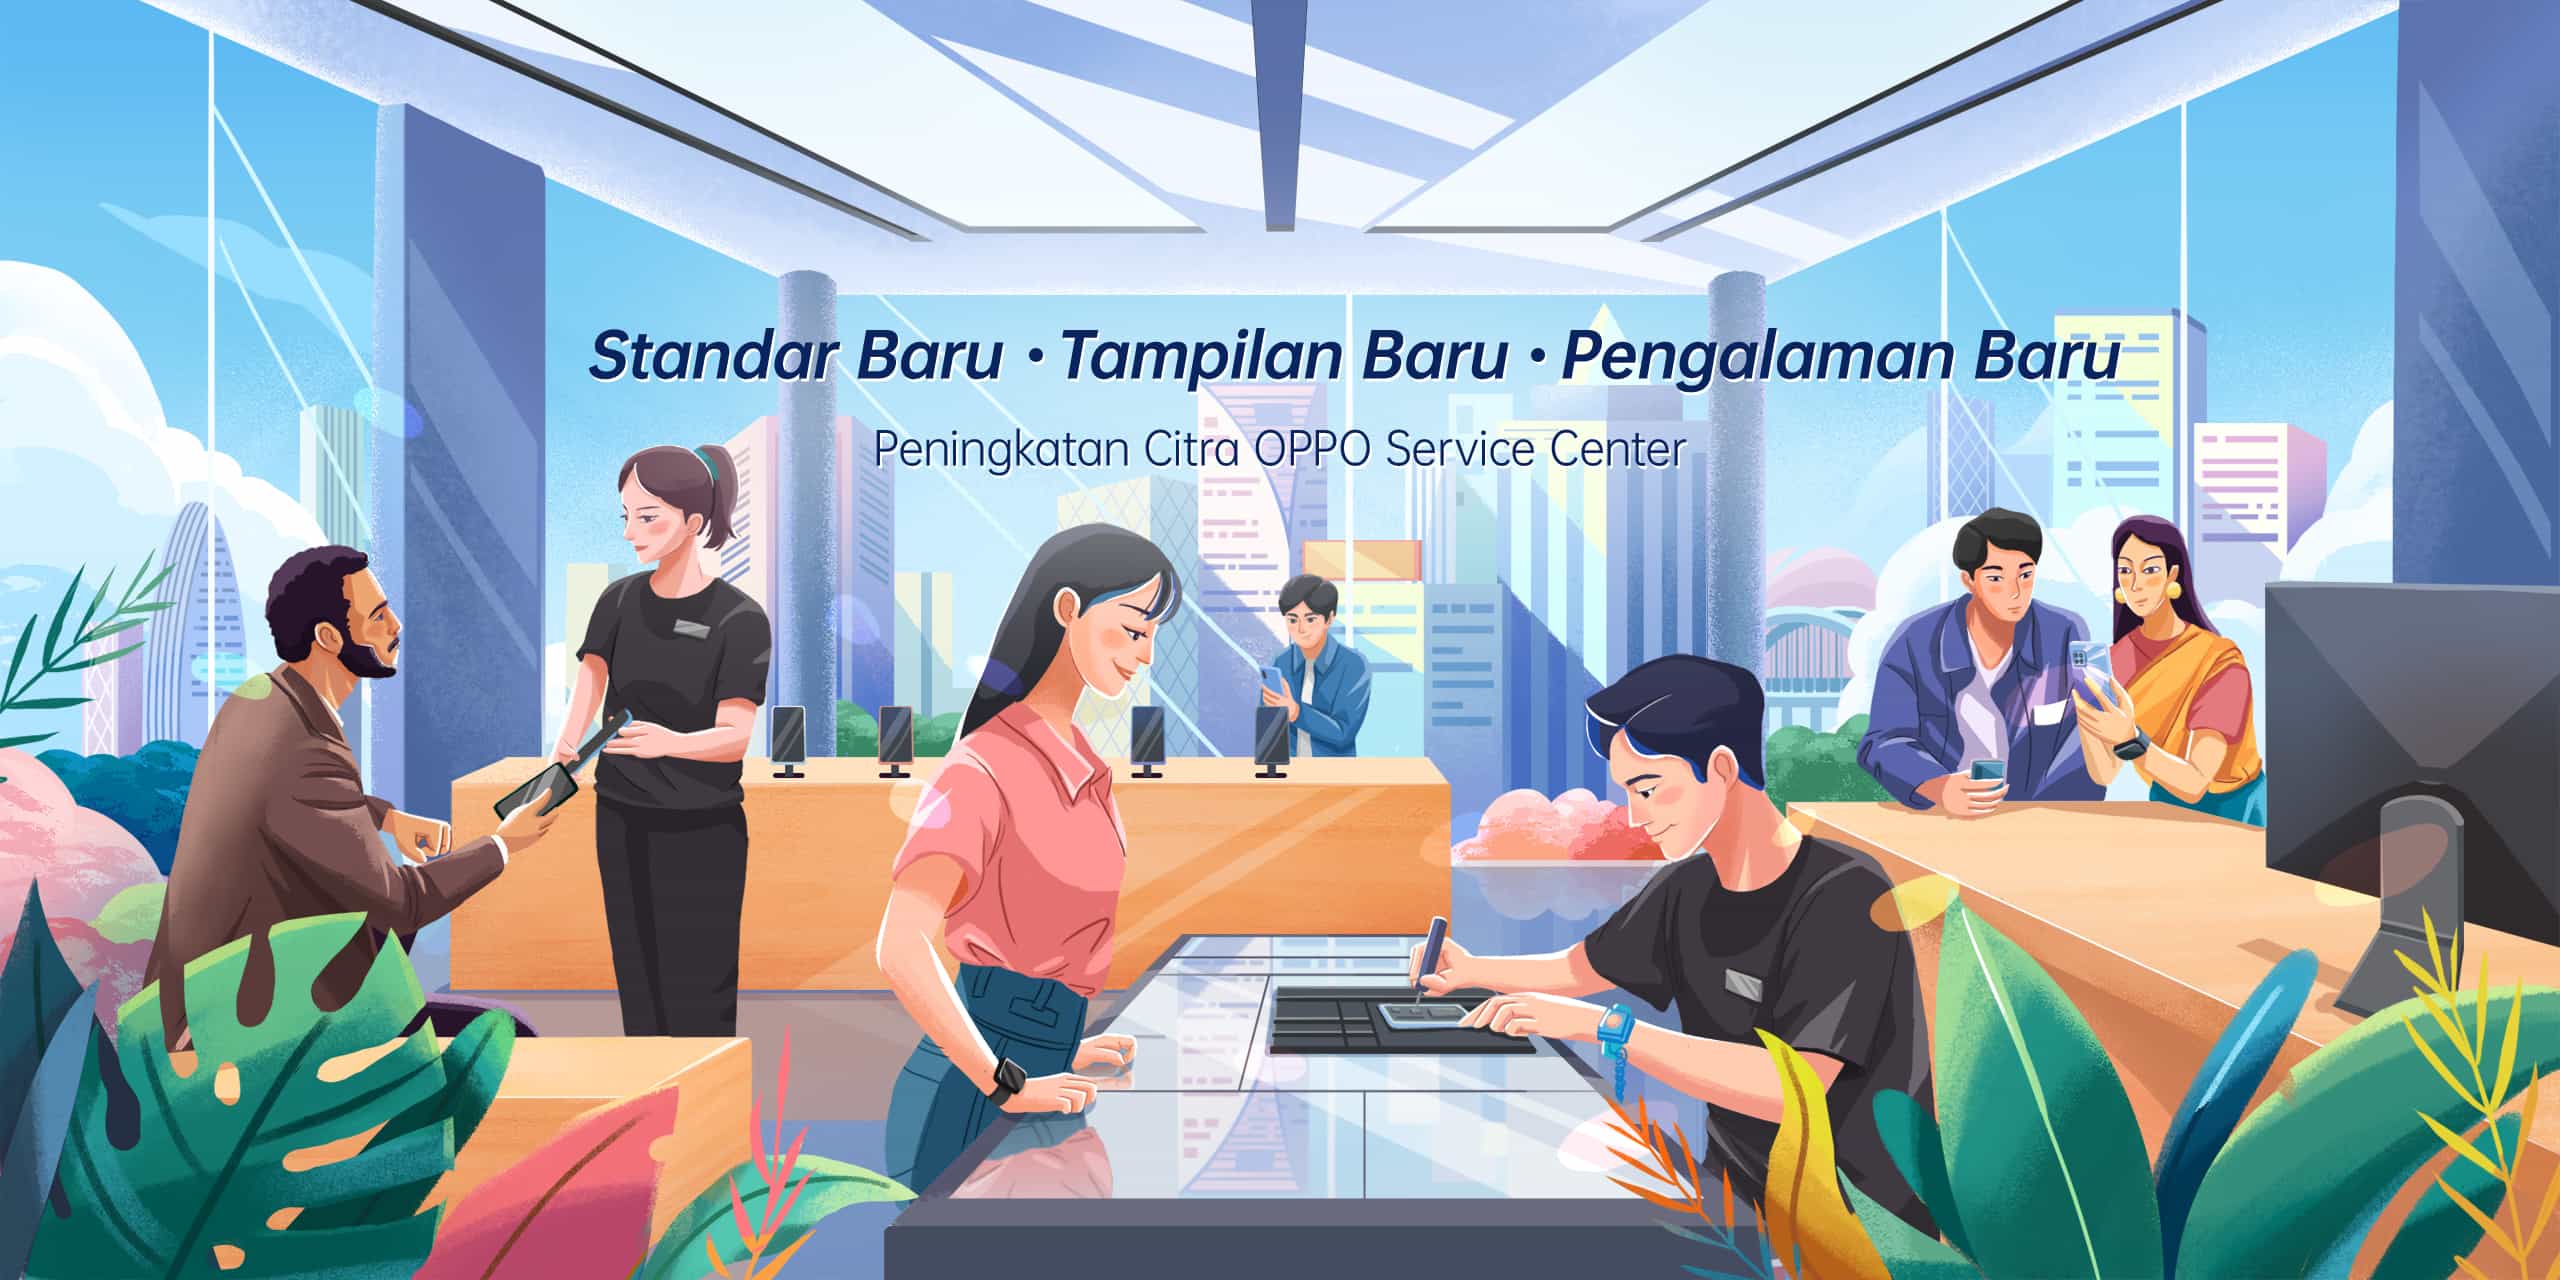 Peningkatan Citra OPPO Service Center